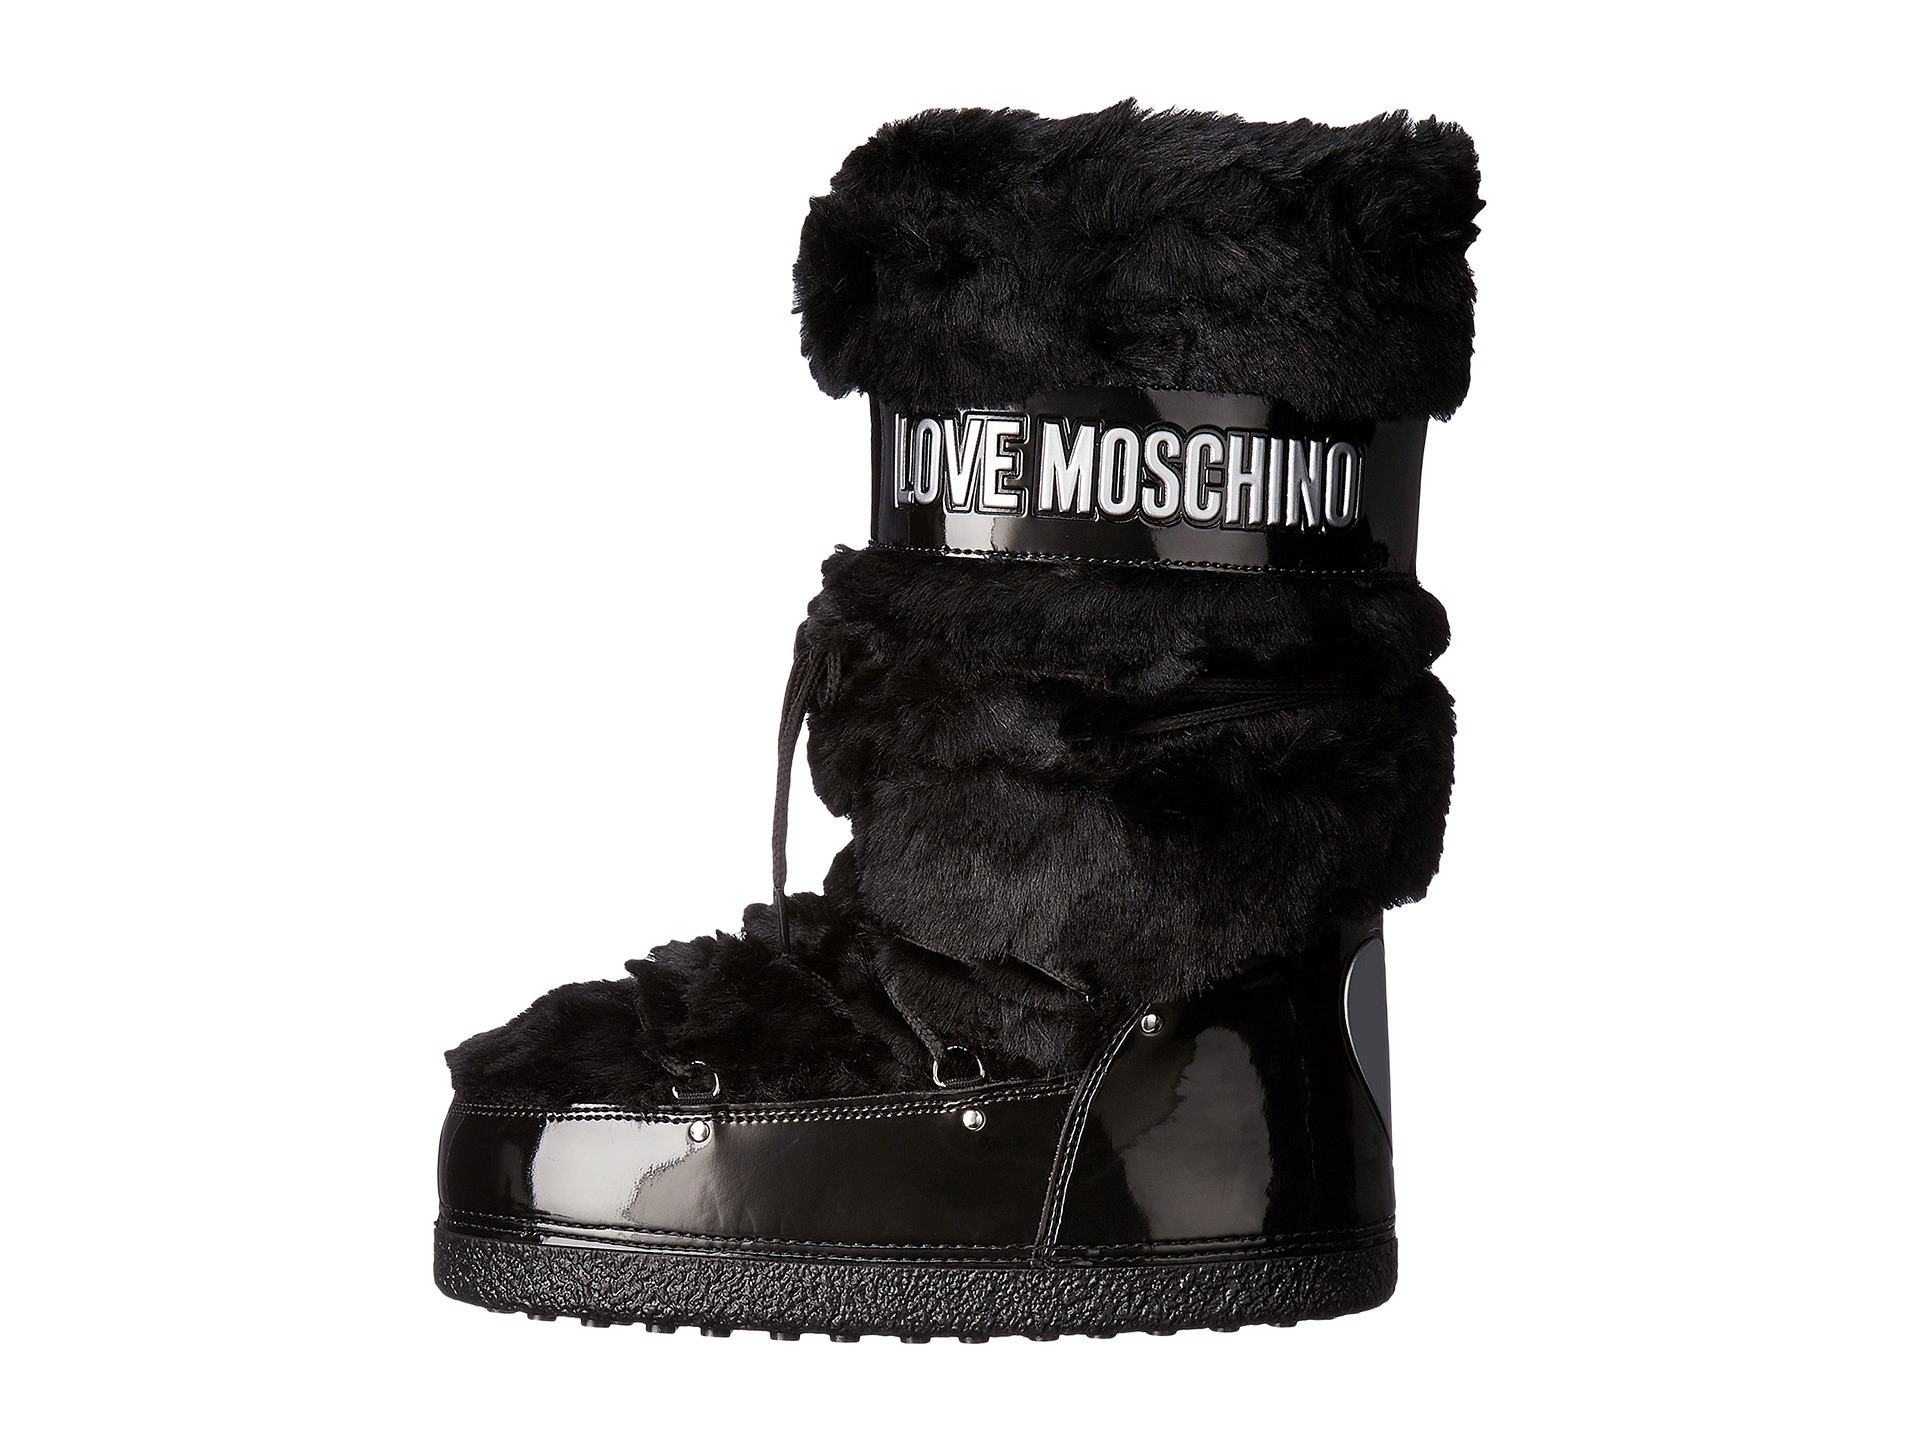 LOVE Moschino Faux Fur Moon Boot Black - Zappos.com Free Shipping BOTH Ways